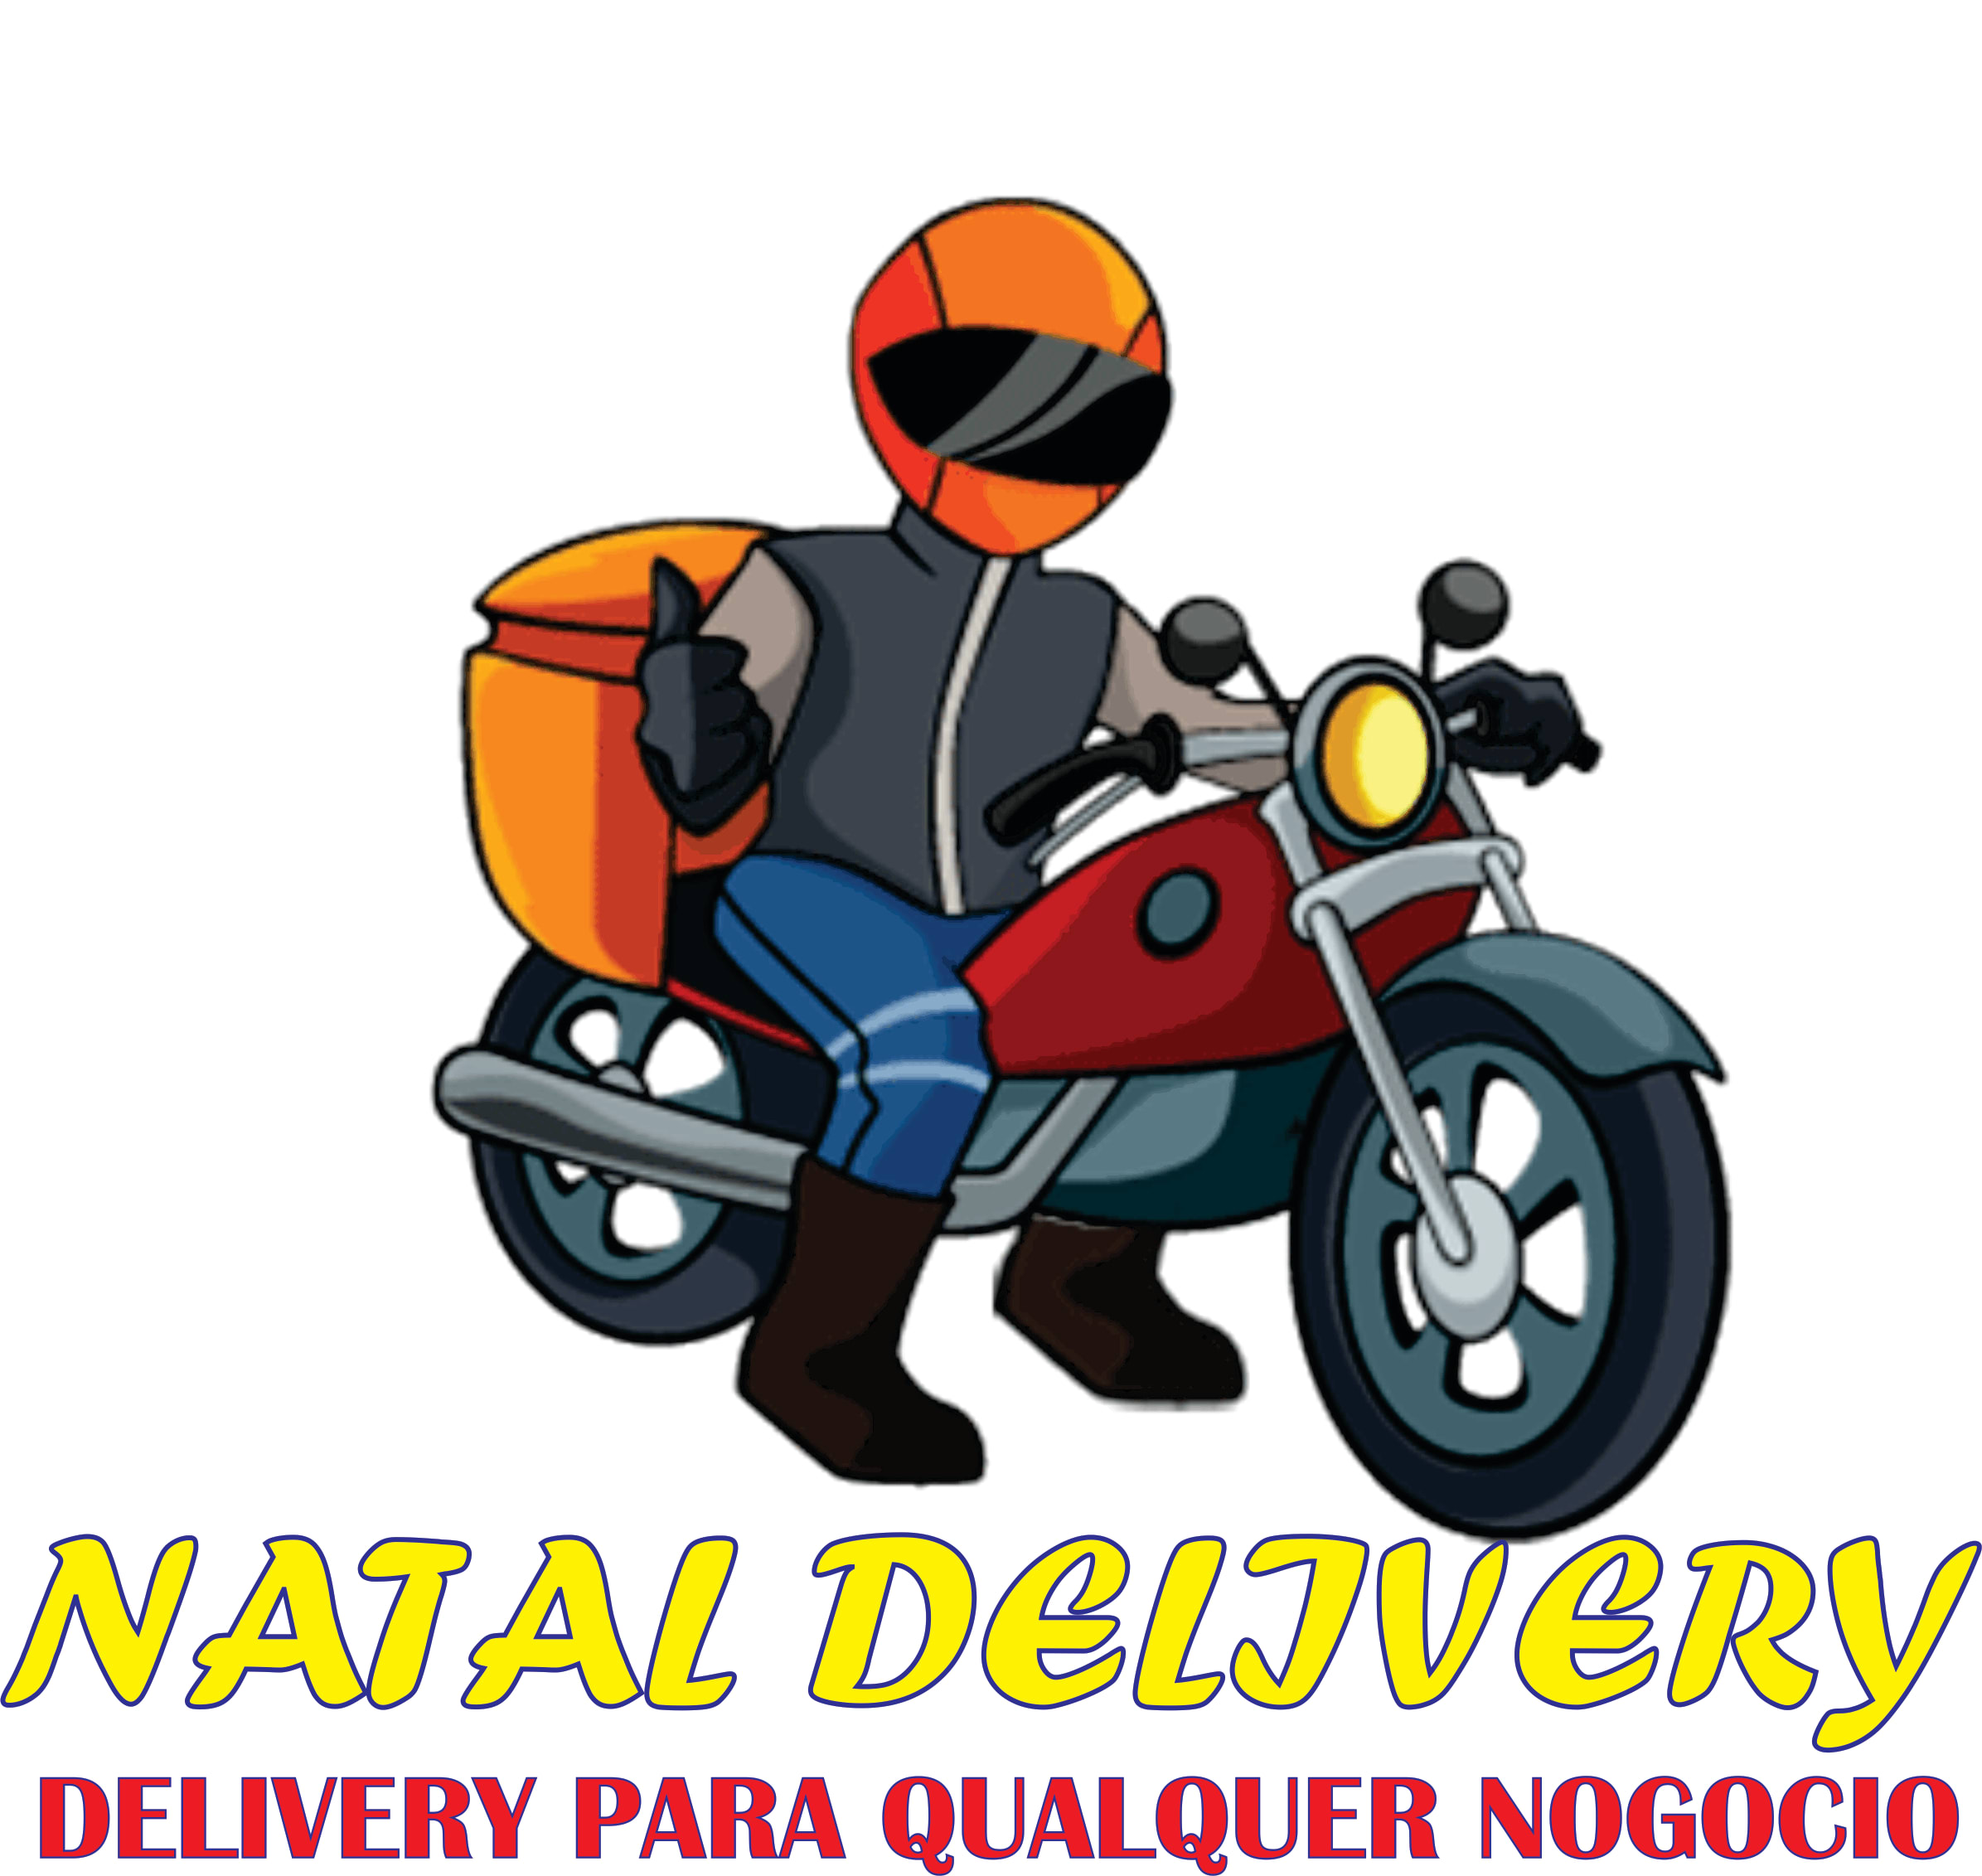 Diária - Serviço de Entregas - Motoboy Delivery - Serviço de